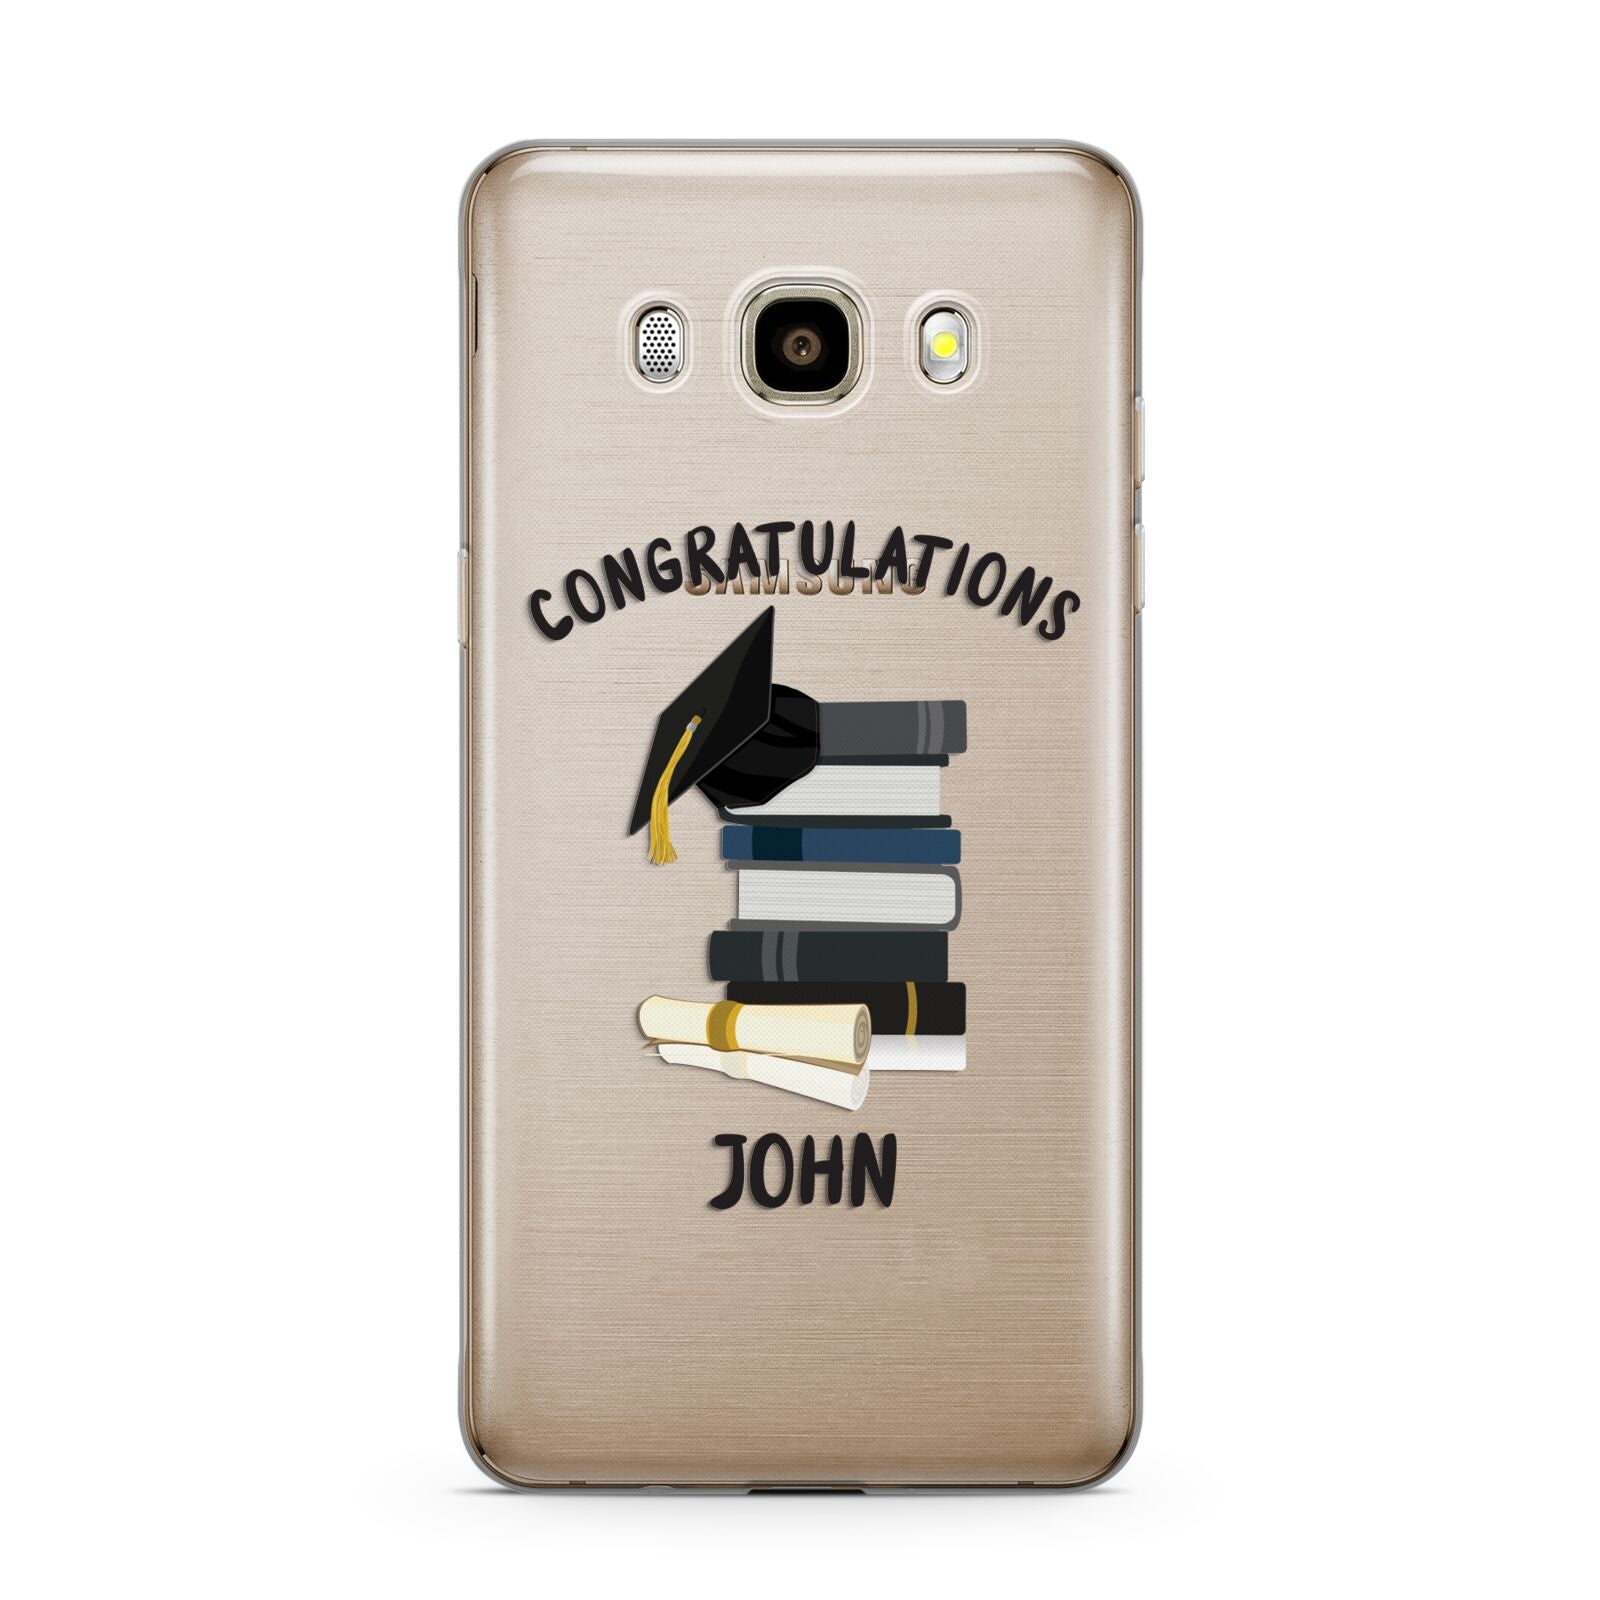 Congratulations Graduate Samsung Galaxy J7 2016 Case on gold phone